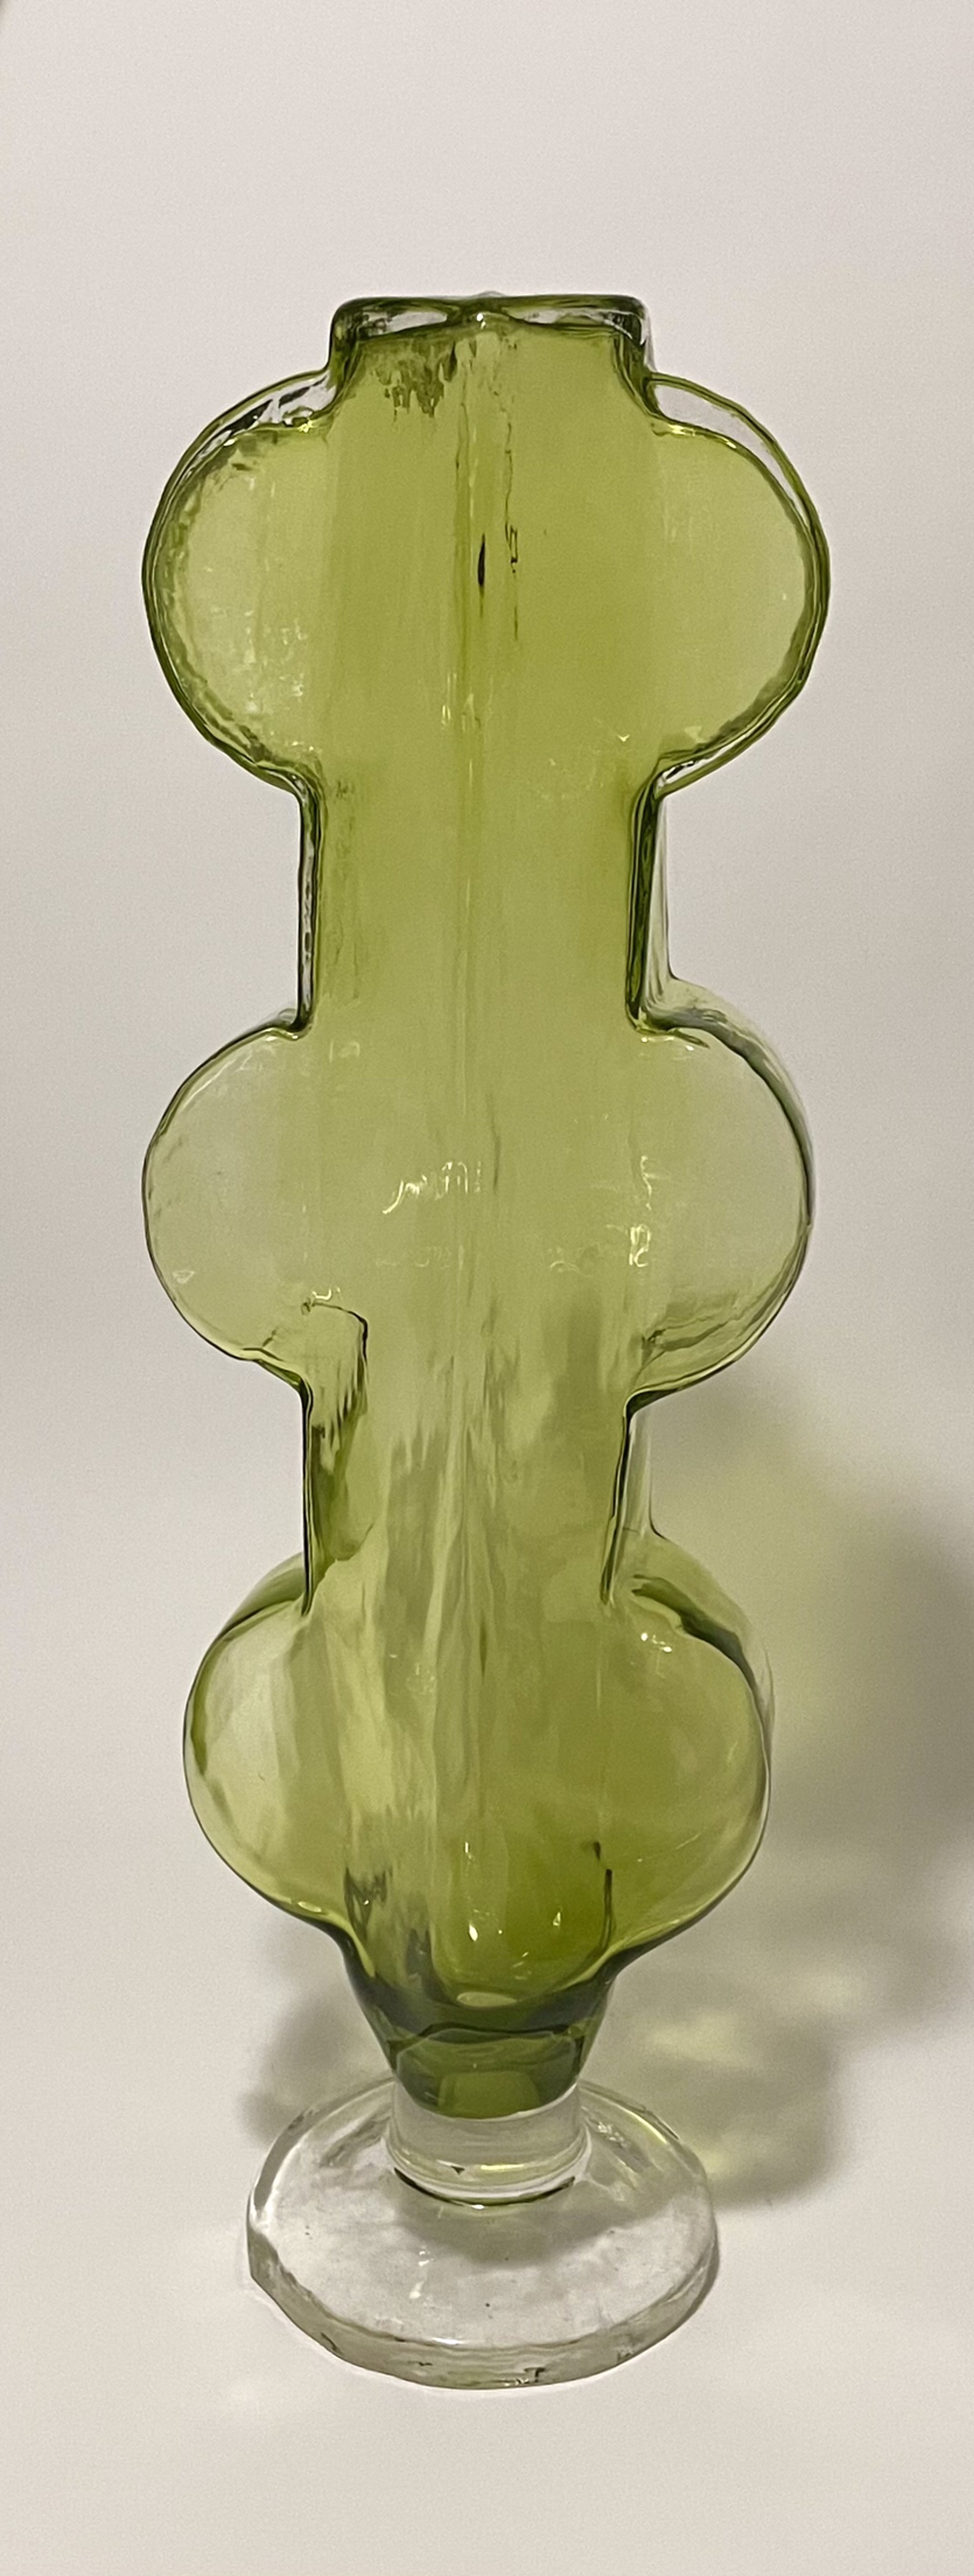 Olive Form by Bengt & Trefny Hokanson